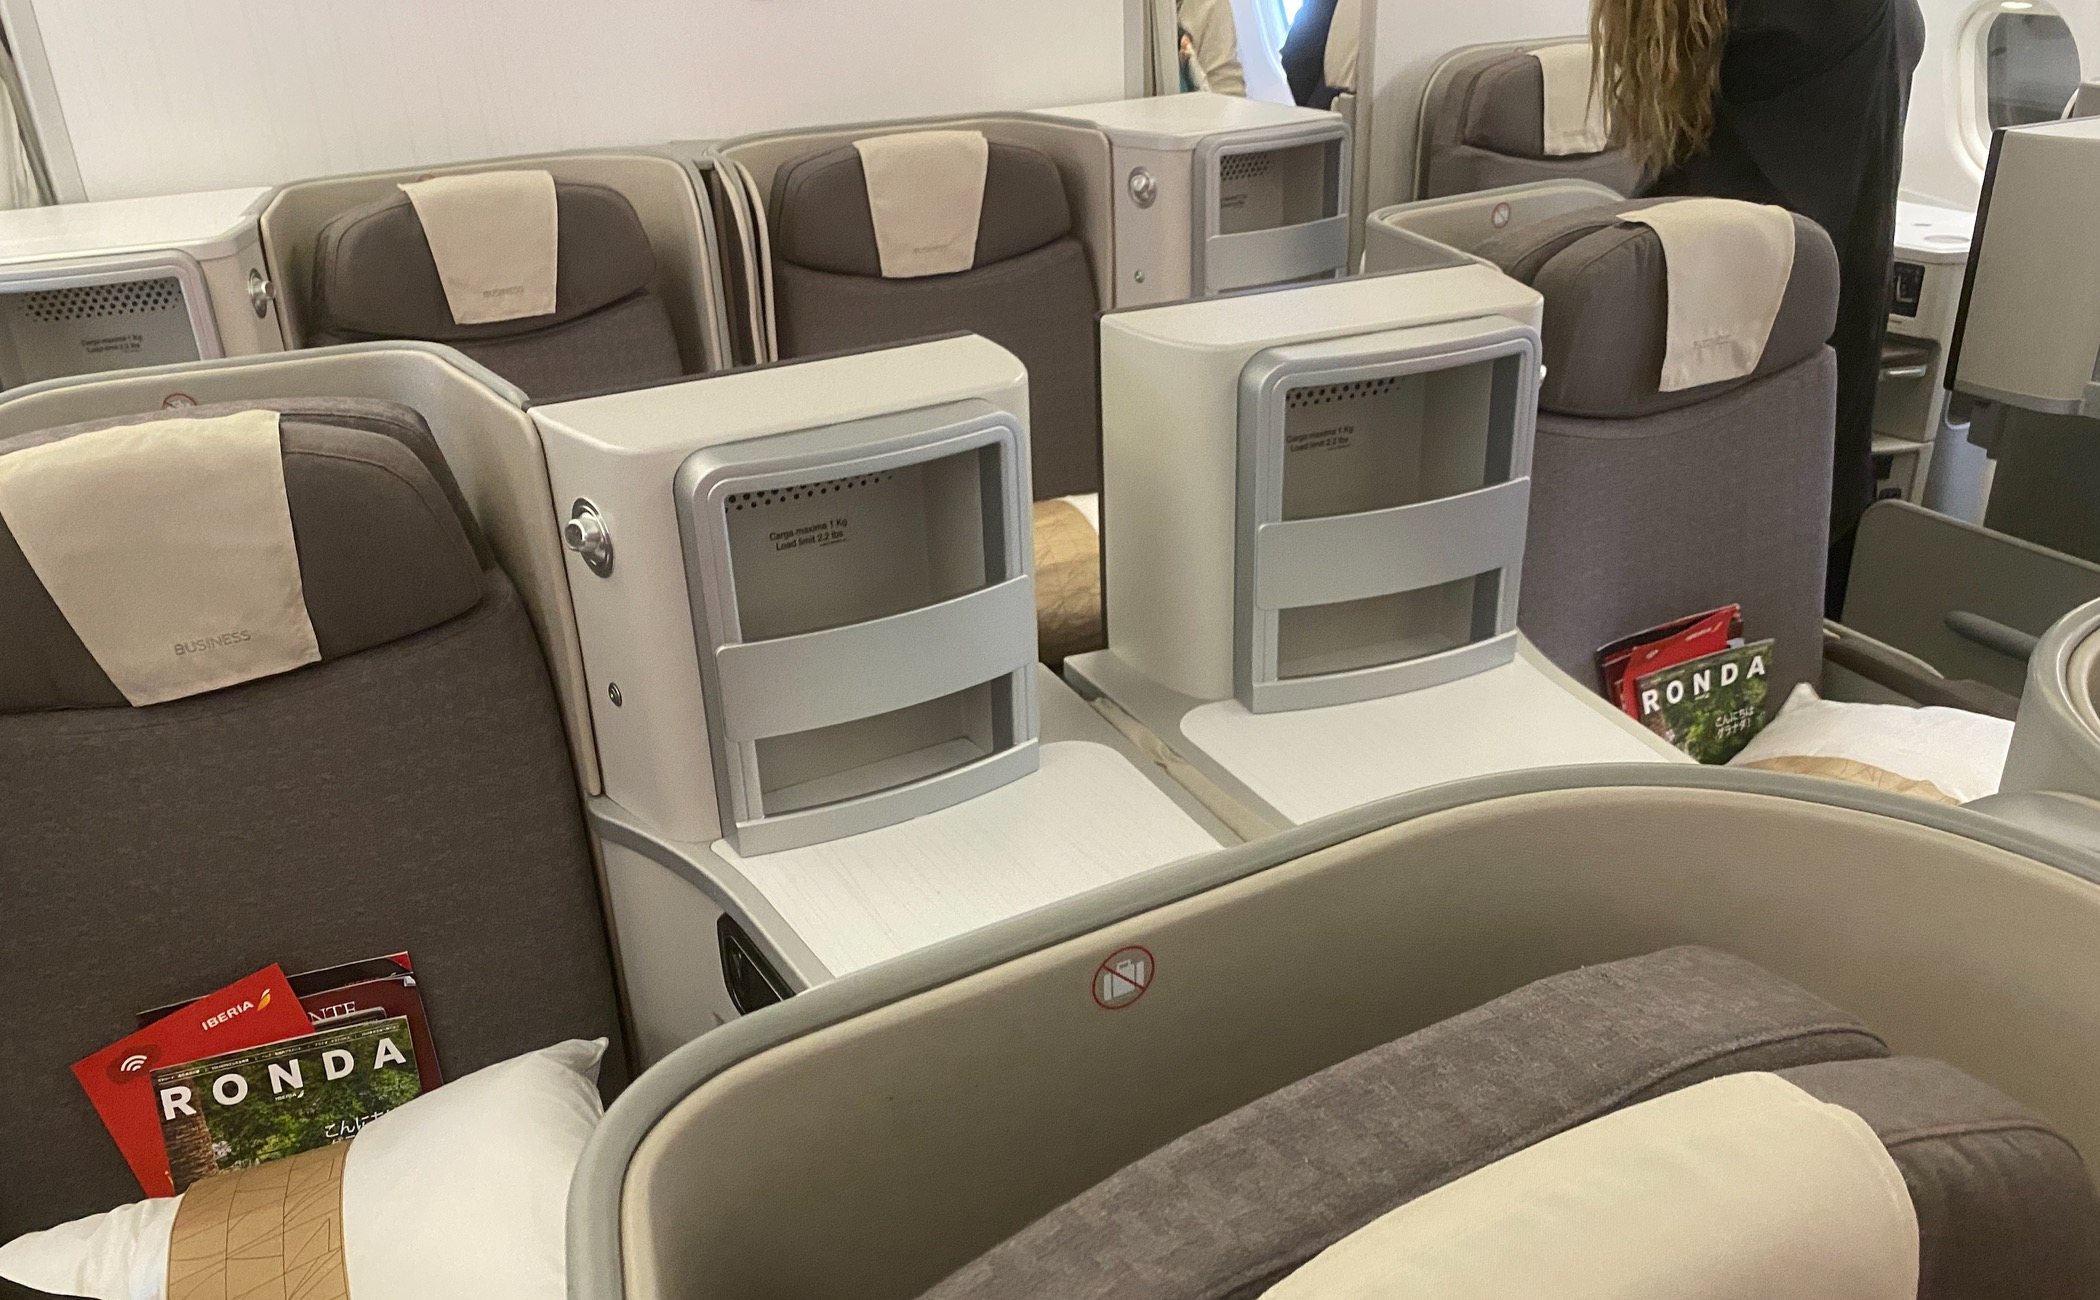 Iberia Madrid - Tokio Business Class A330 review - Bekia Viajes